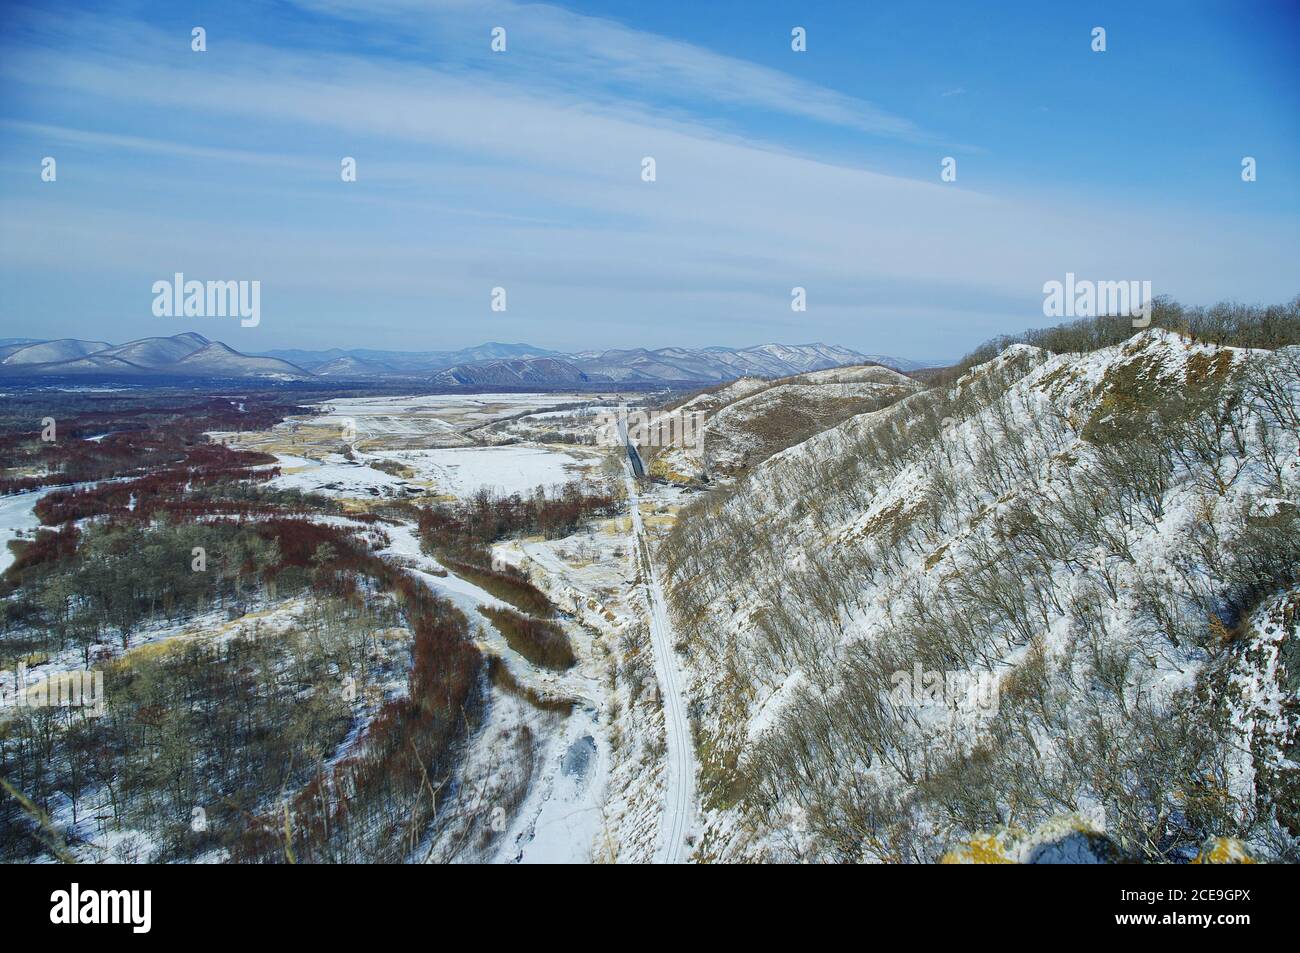 winter landscape Stock Photo